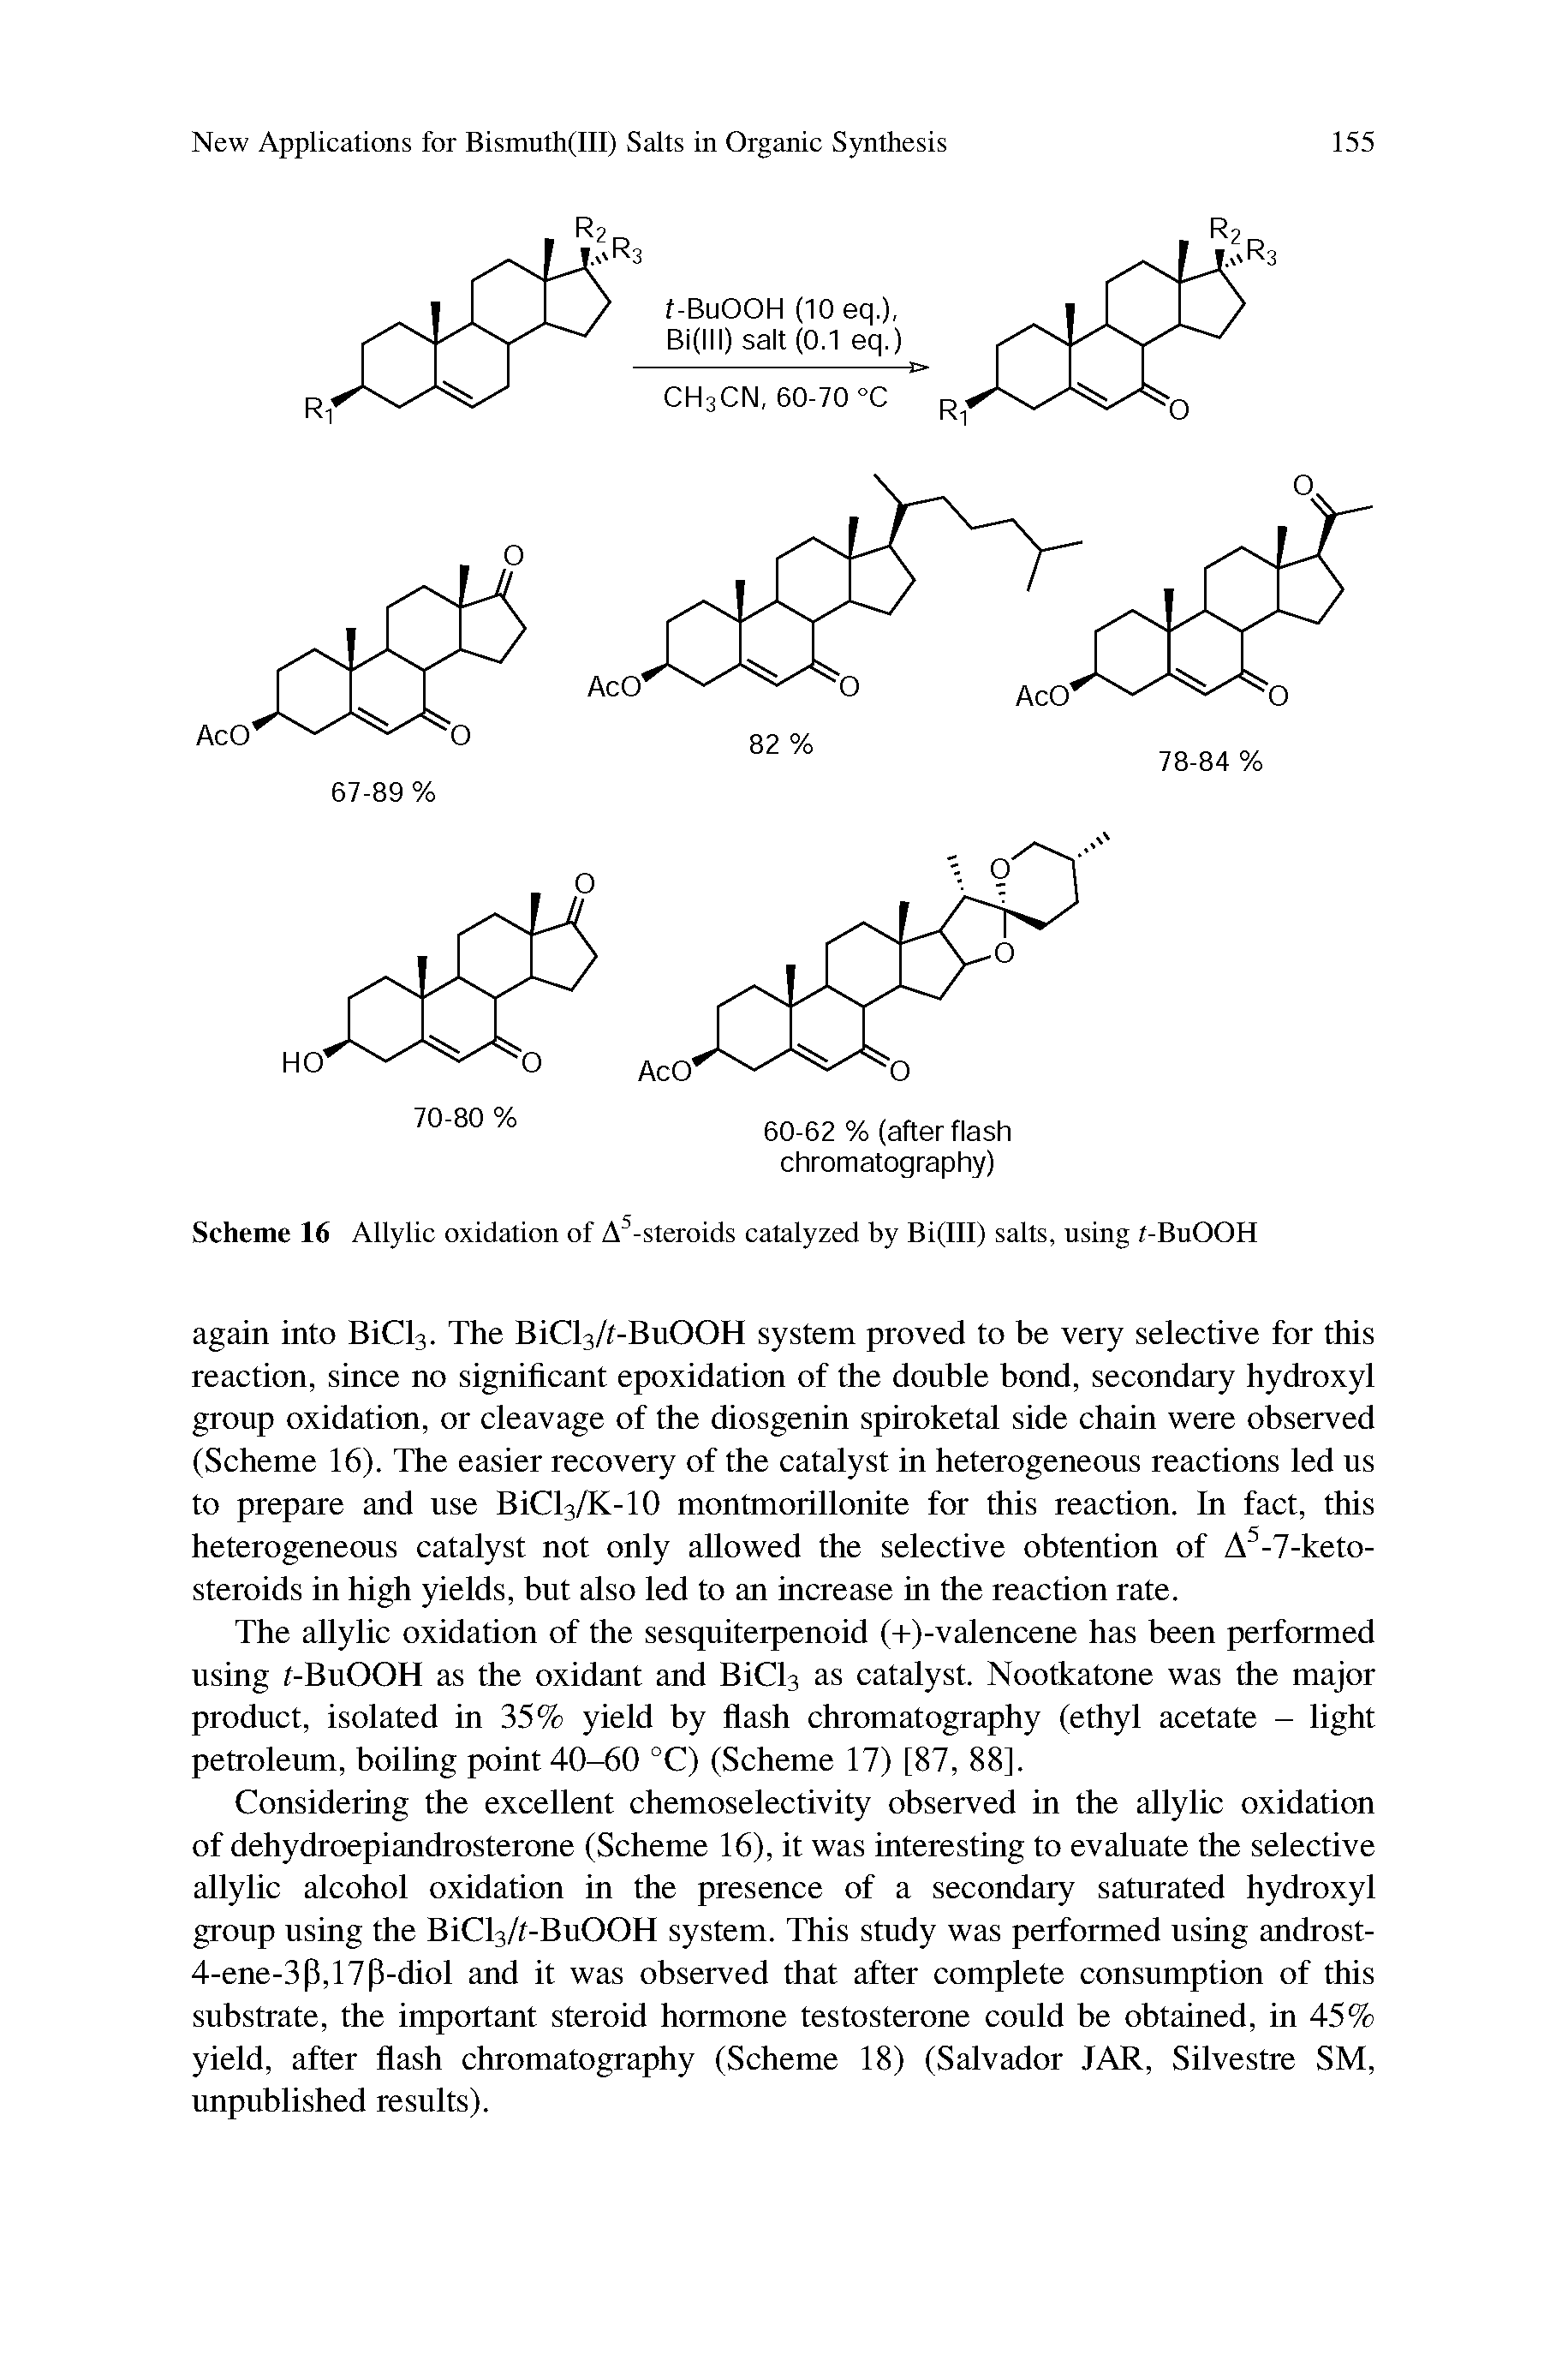 Scheme 16 Allylic oxidation of A5-steroids catalyzed by Bi(III) salts, using r-BuOOH...